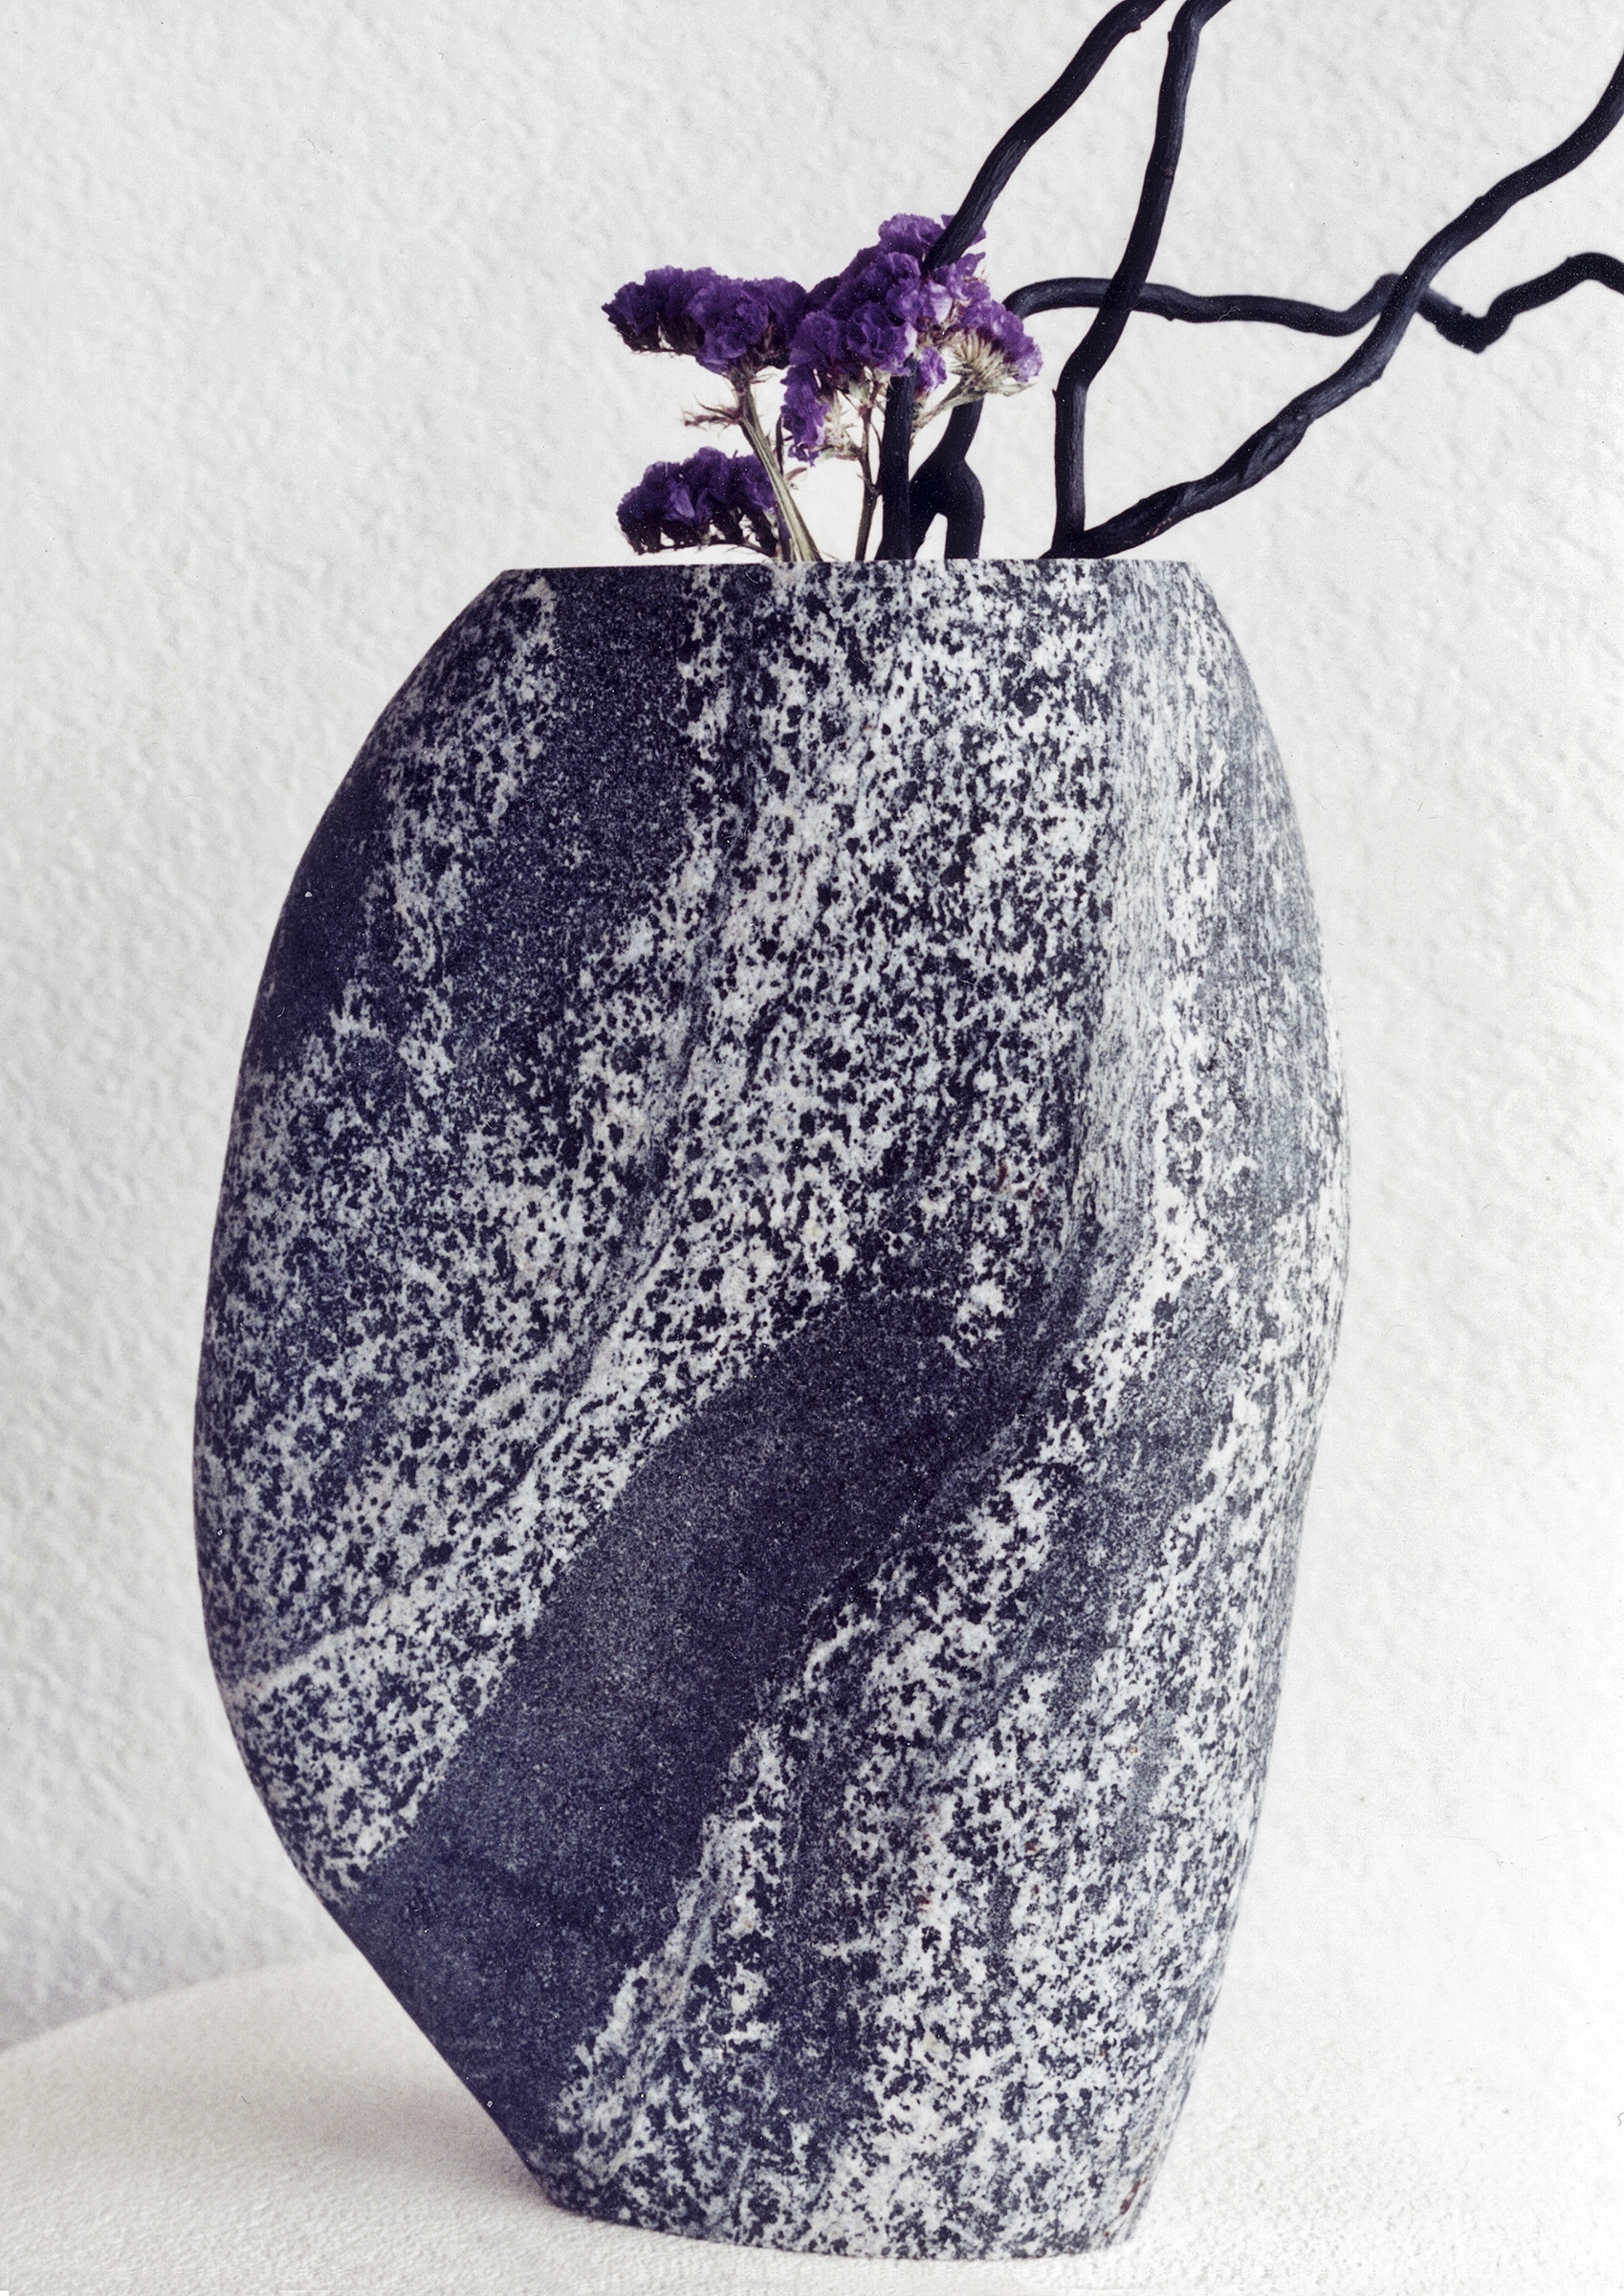 Vase for Ikebana (Japanese flower arranging), granite bolder from a Puget Sound beach, 14"H x 8"W x 4"D.